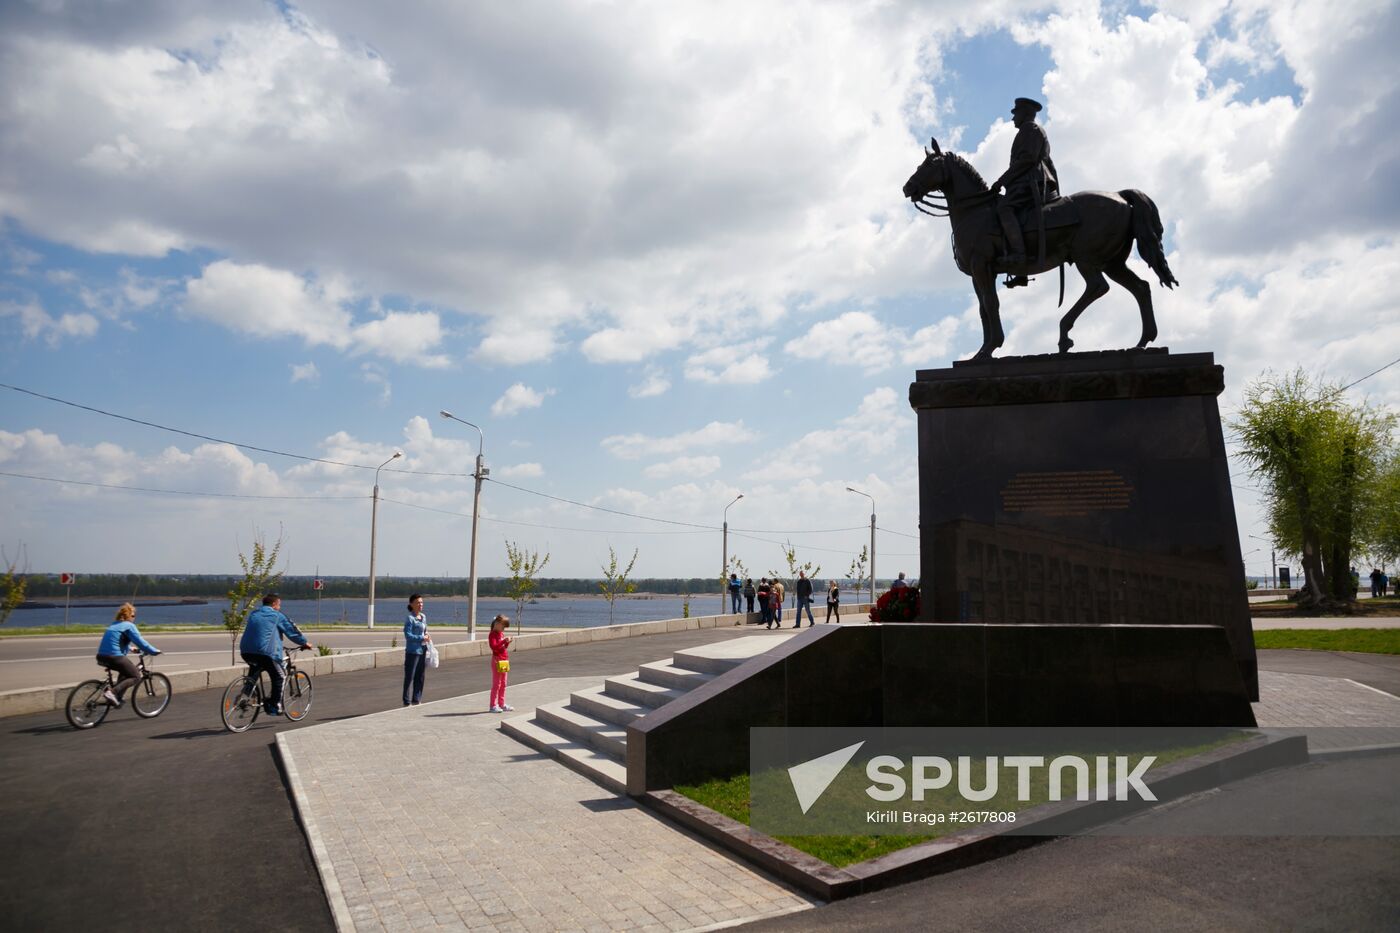 Monument to Marshal Rokossovsky in Volgograd